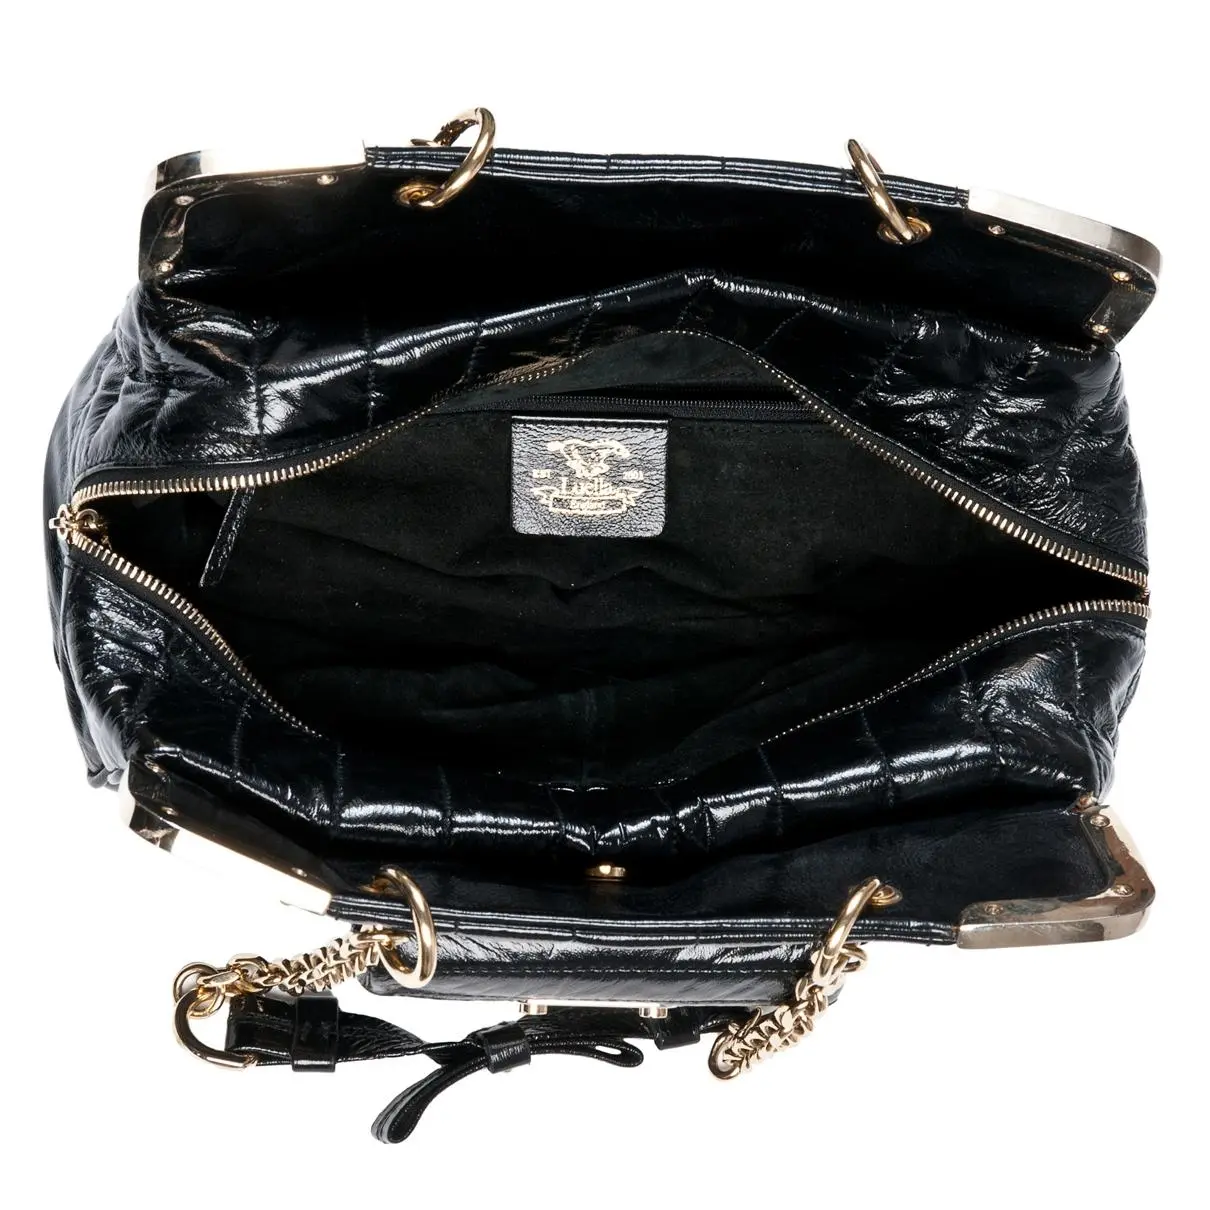 Luxury Luella Handbags Women